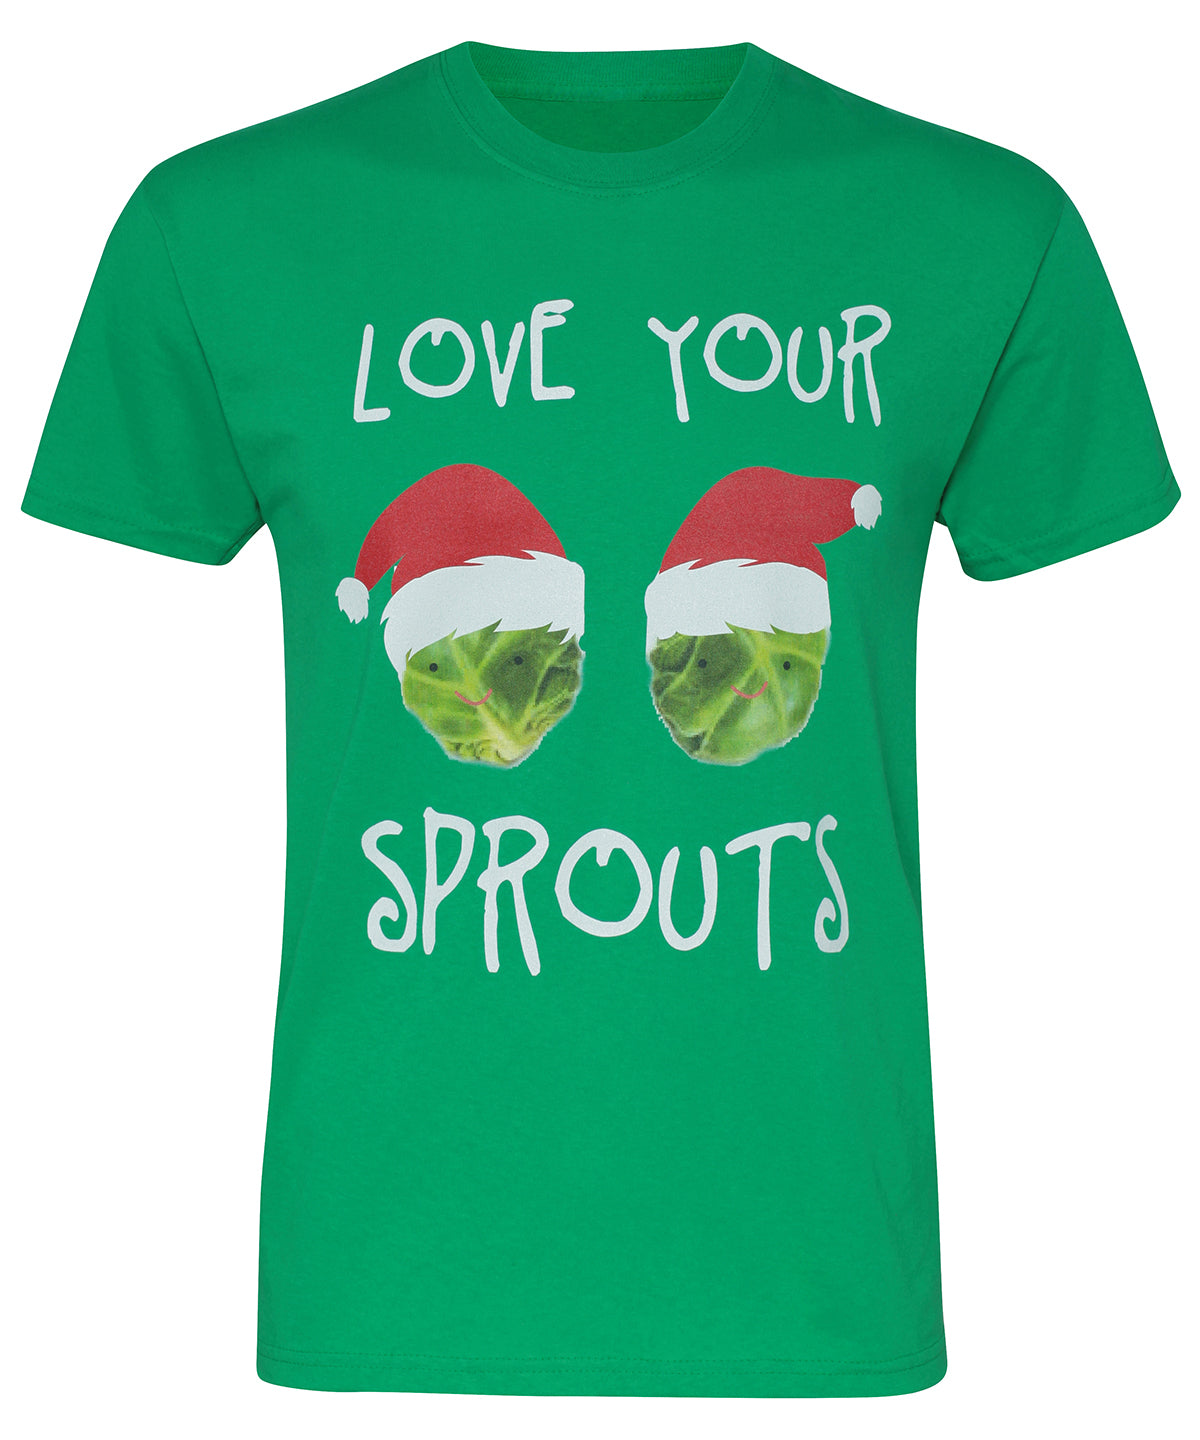 Stuttermabolir - Men's "Love Your Sprouts" Short Sleeve Tee